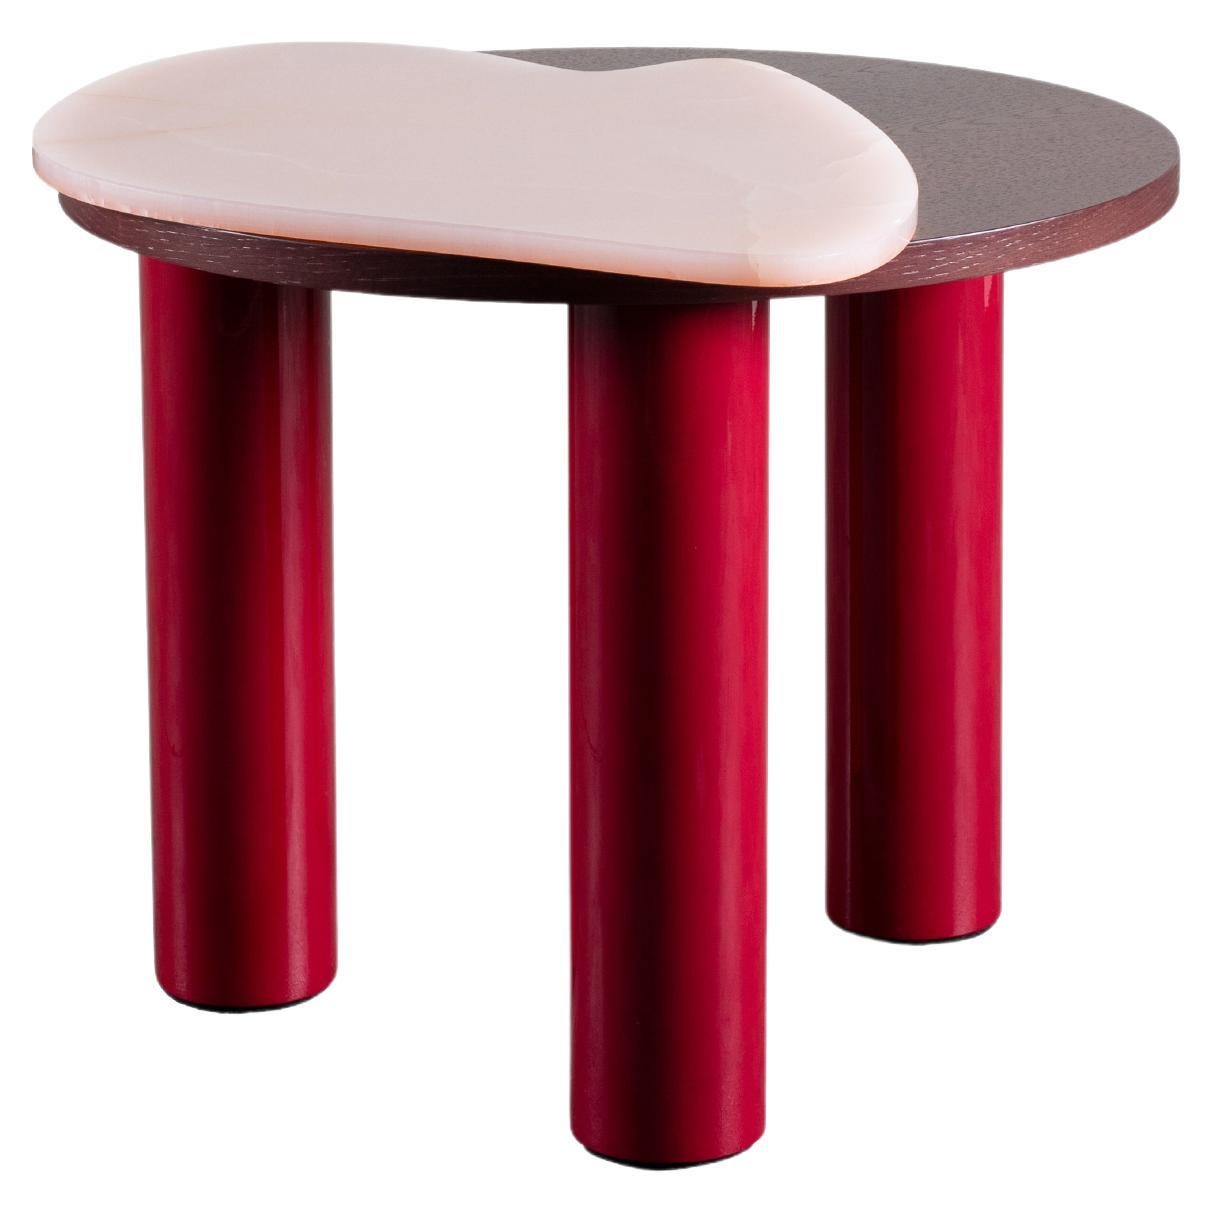 Greenapple Side Table, Bordeira Side Table, Pink Onyx, Handmade in Portugal